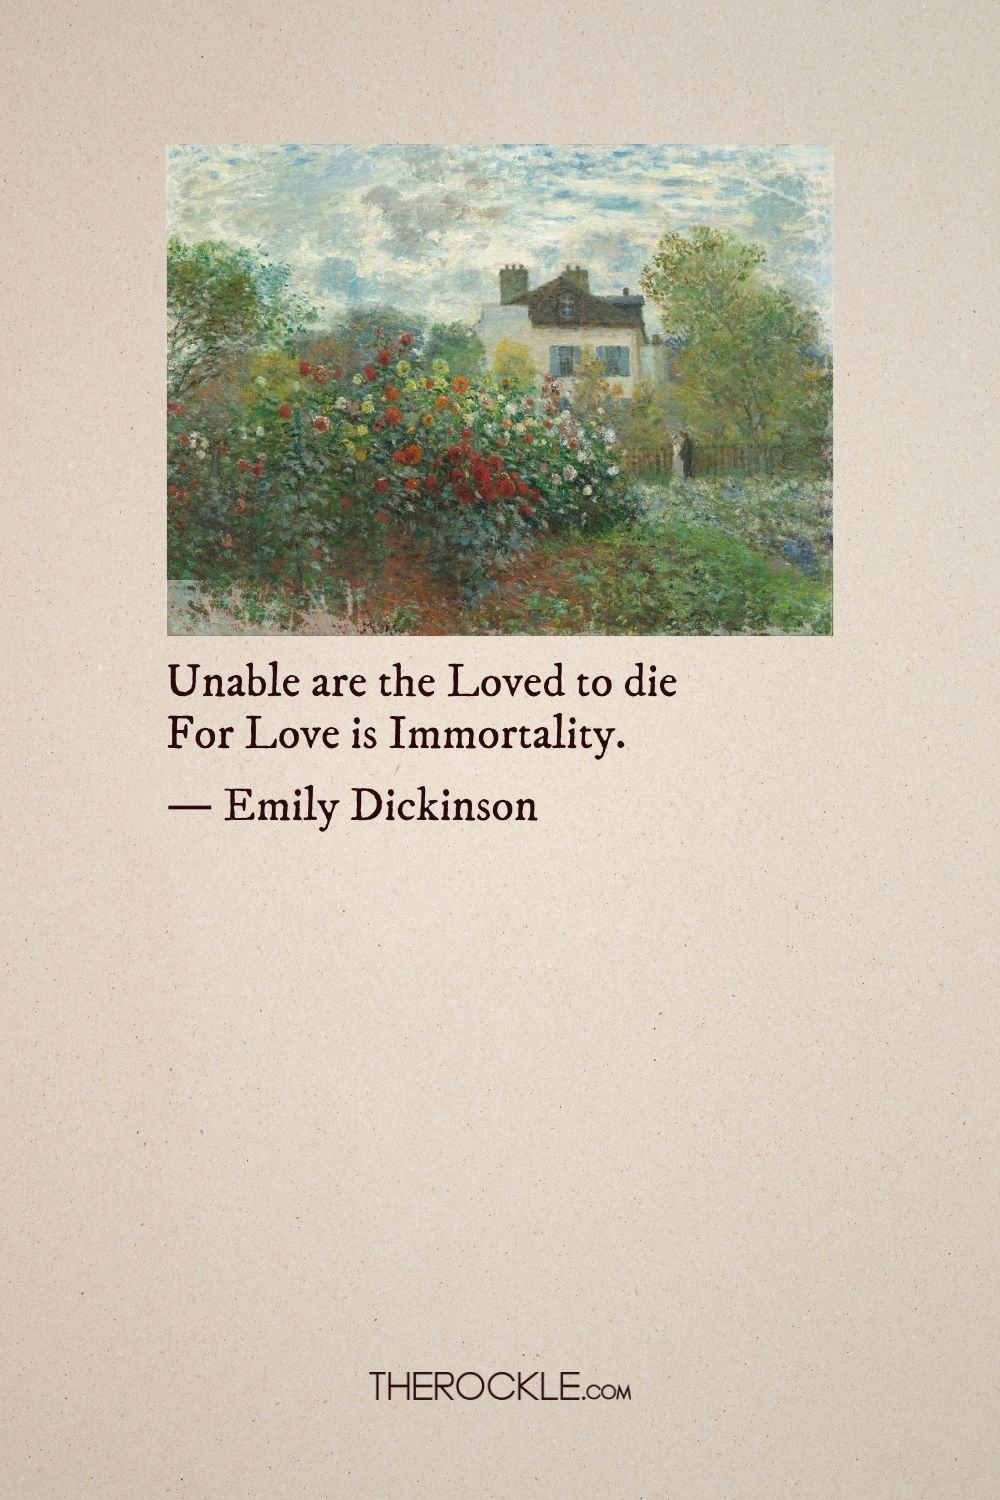 Dickinson on how love transcends death